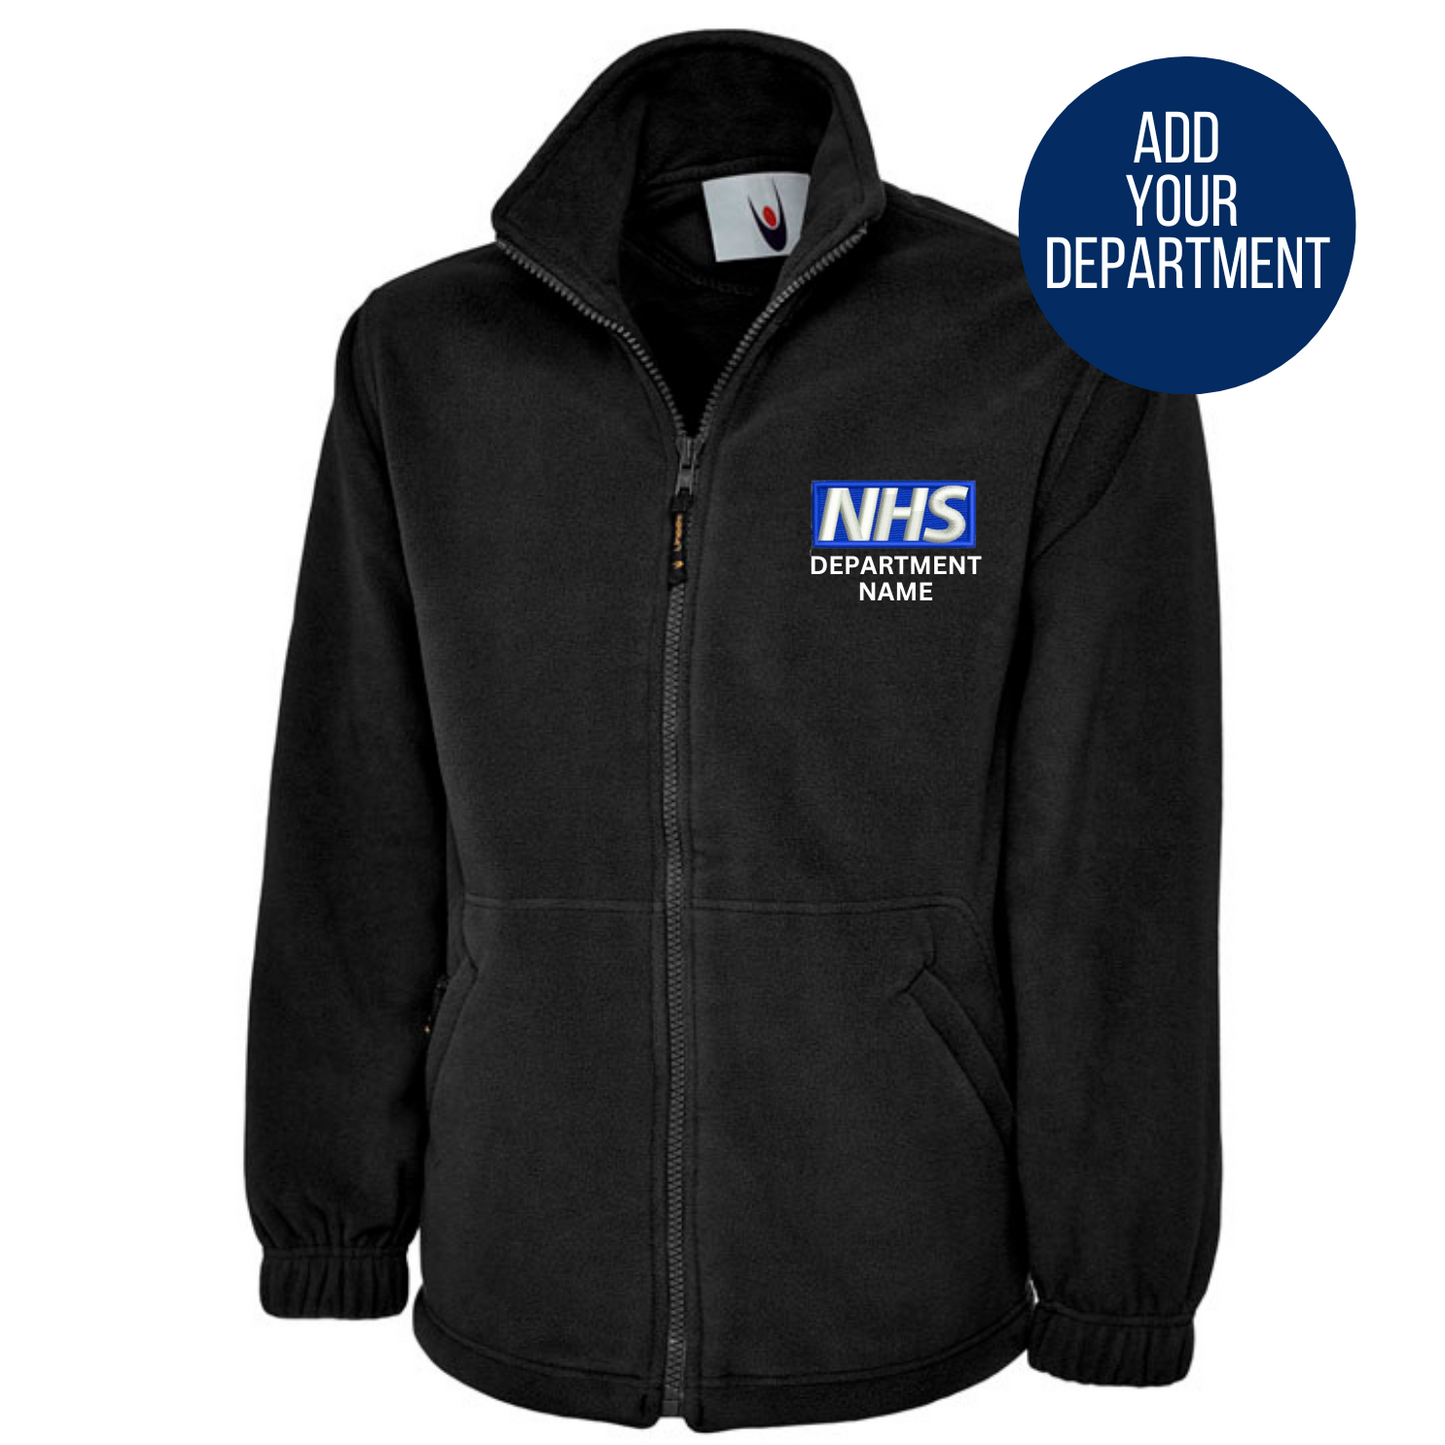 NHS Fleece - Custom Department or Hospital Name